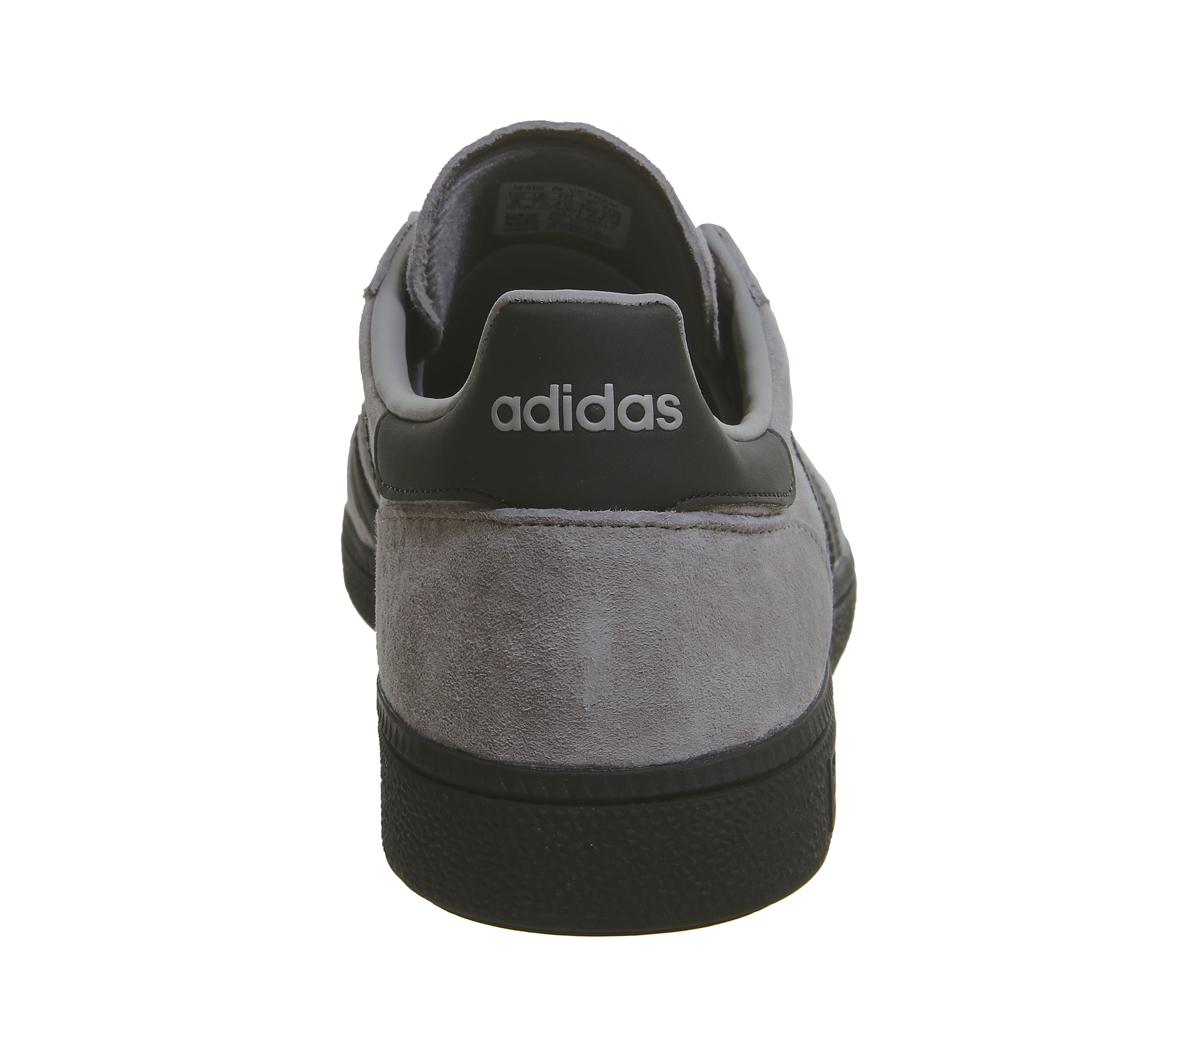 adidas handball spezial trainers solid grey core black silver exclusive